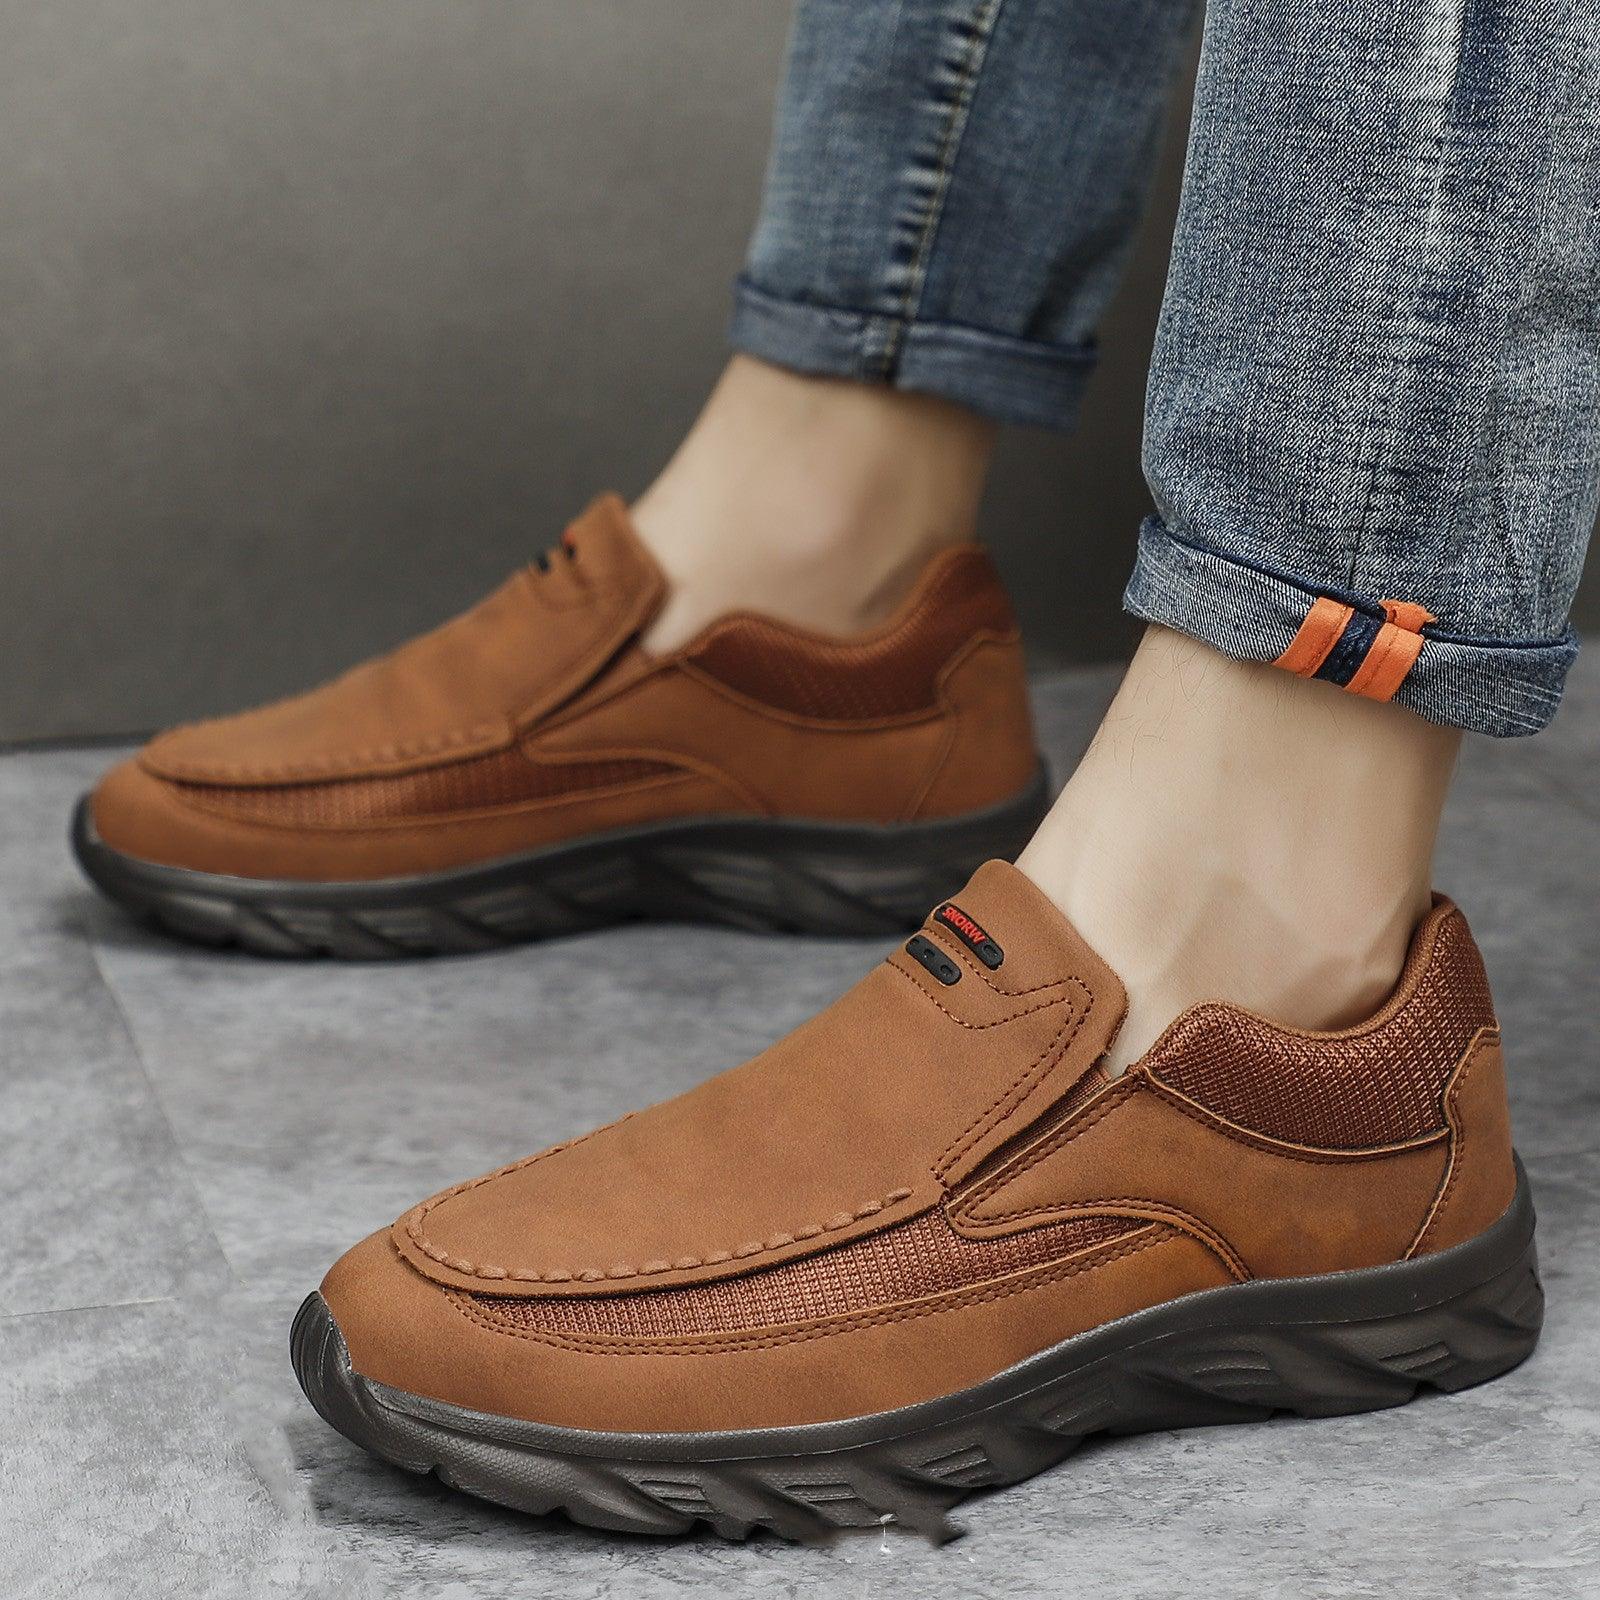 Men's EVA Comfortable Walking Casual Shoes shoes, Bags & accessories